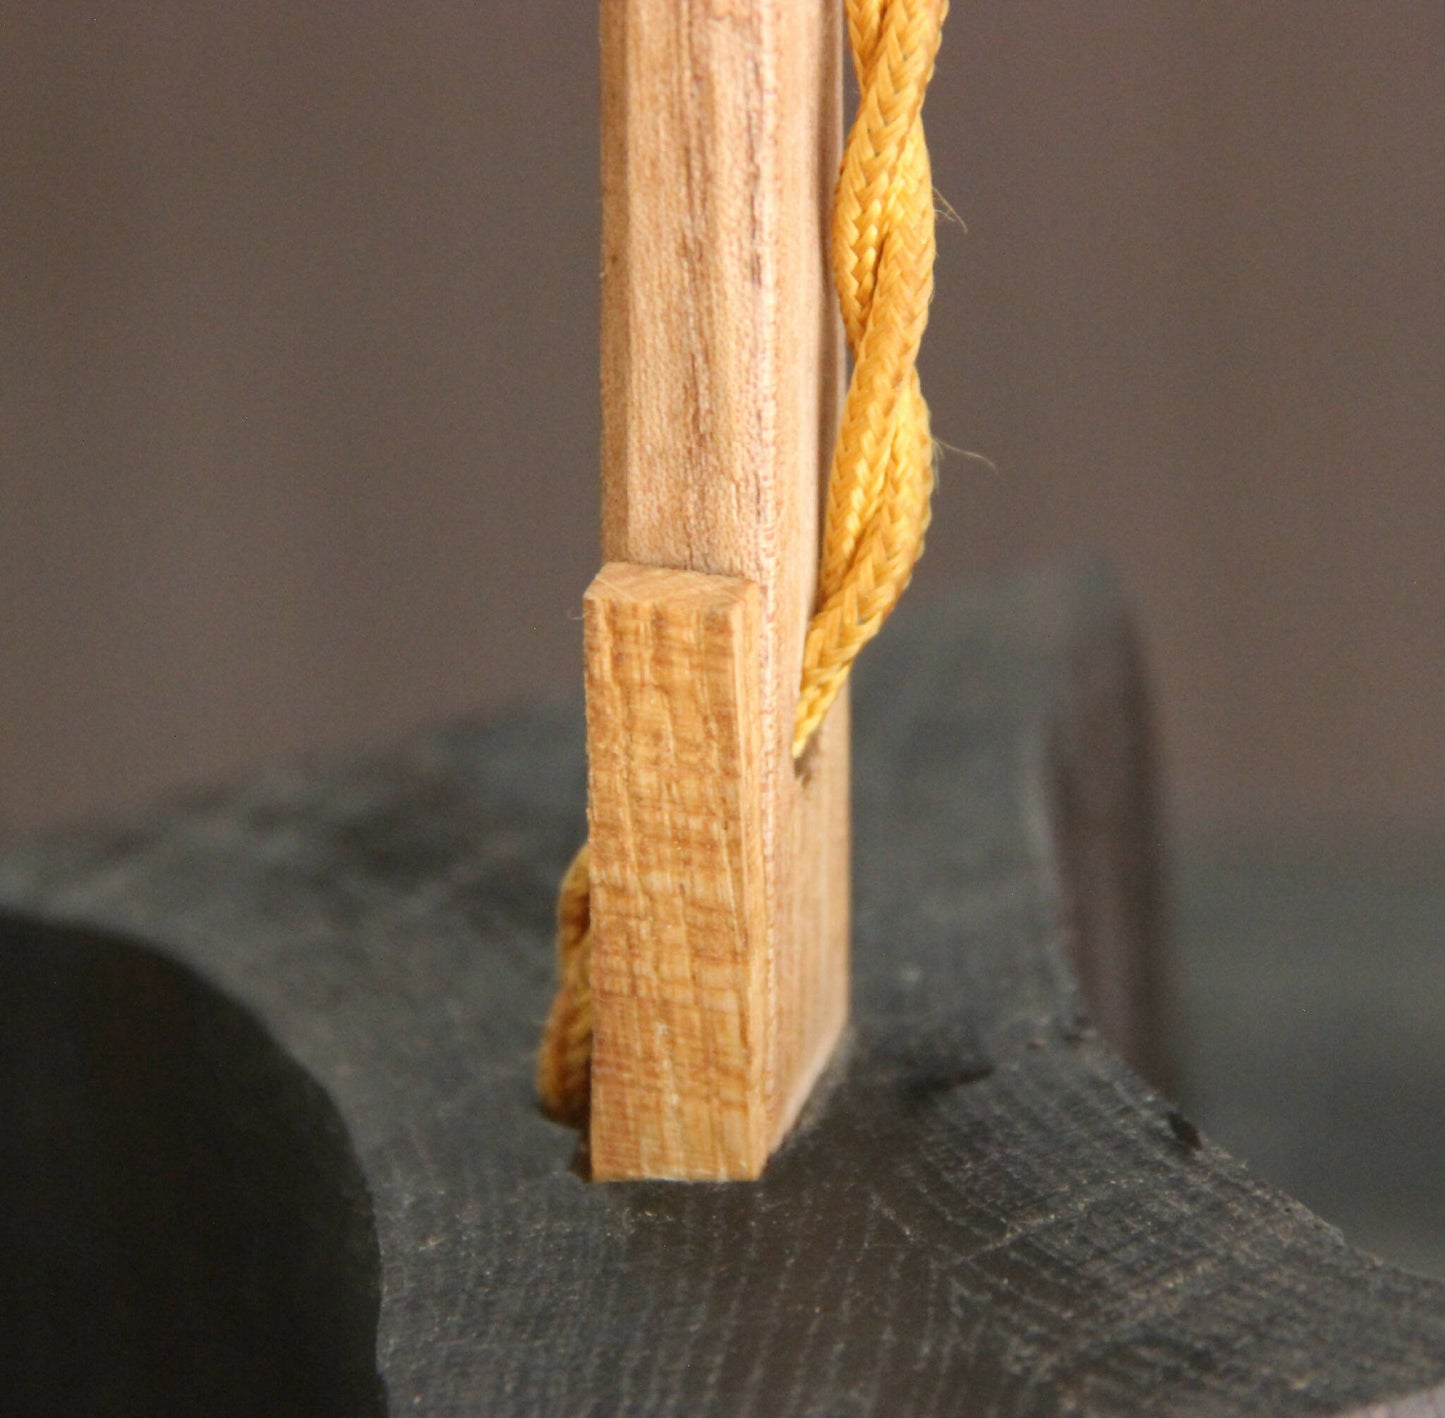 Luminaire Etendard artisanal en bois sculpte fait main artisanat francais